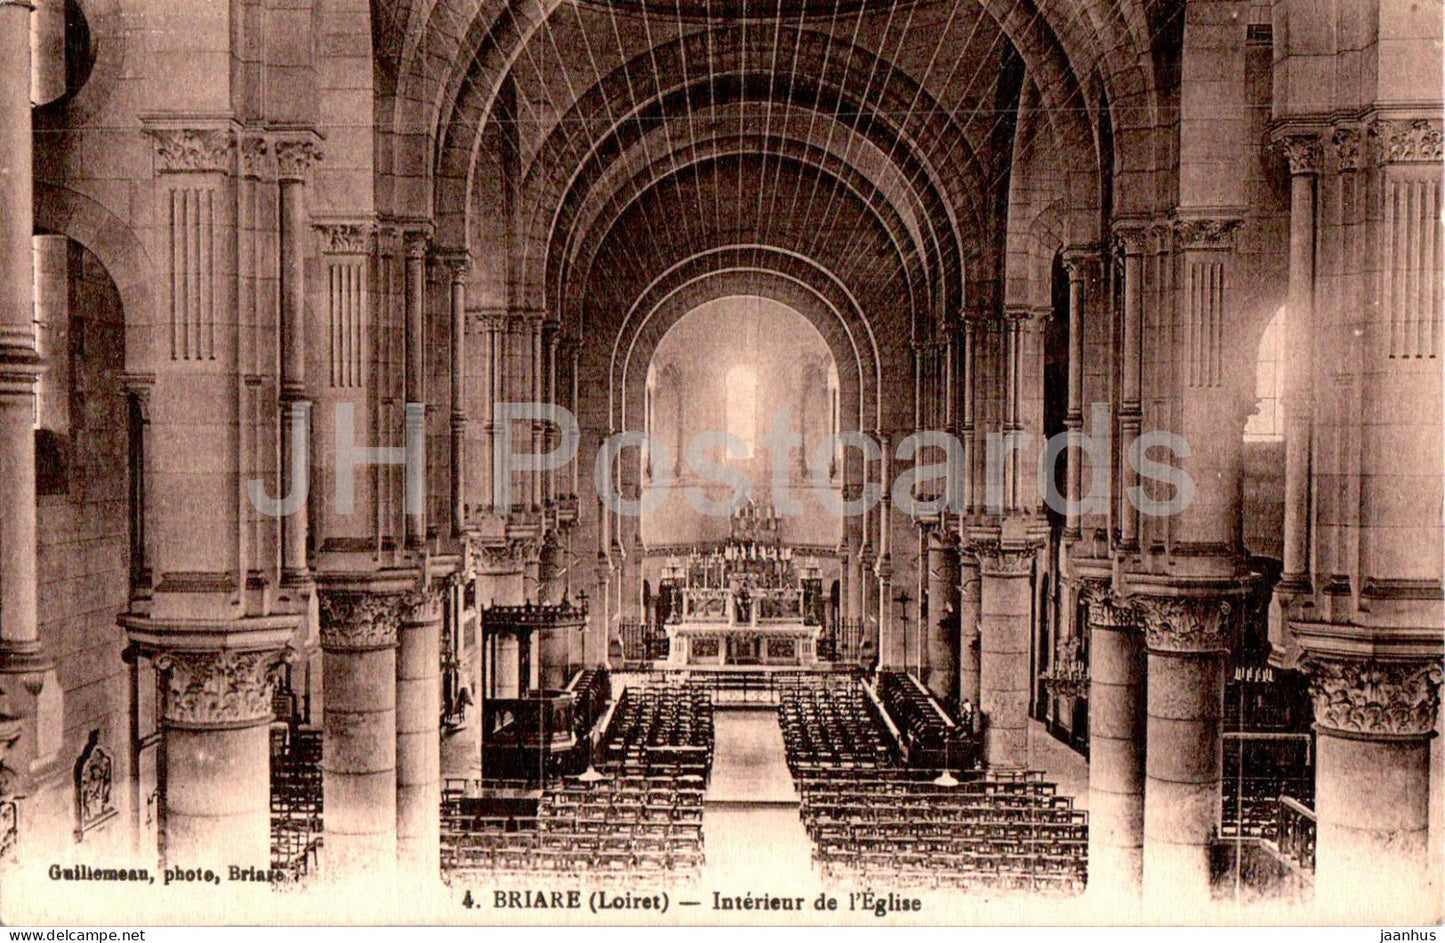 Briare - Interieur de l'Eglise - church - 4 - old postcard - France - unused - JH Postcards